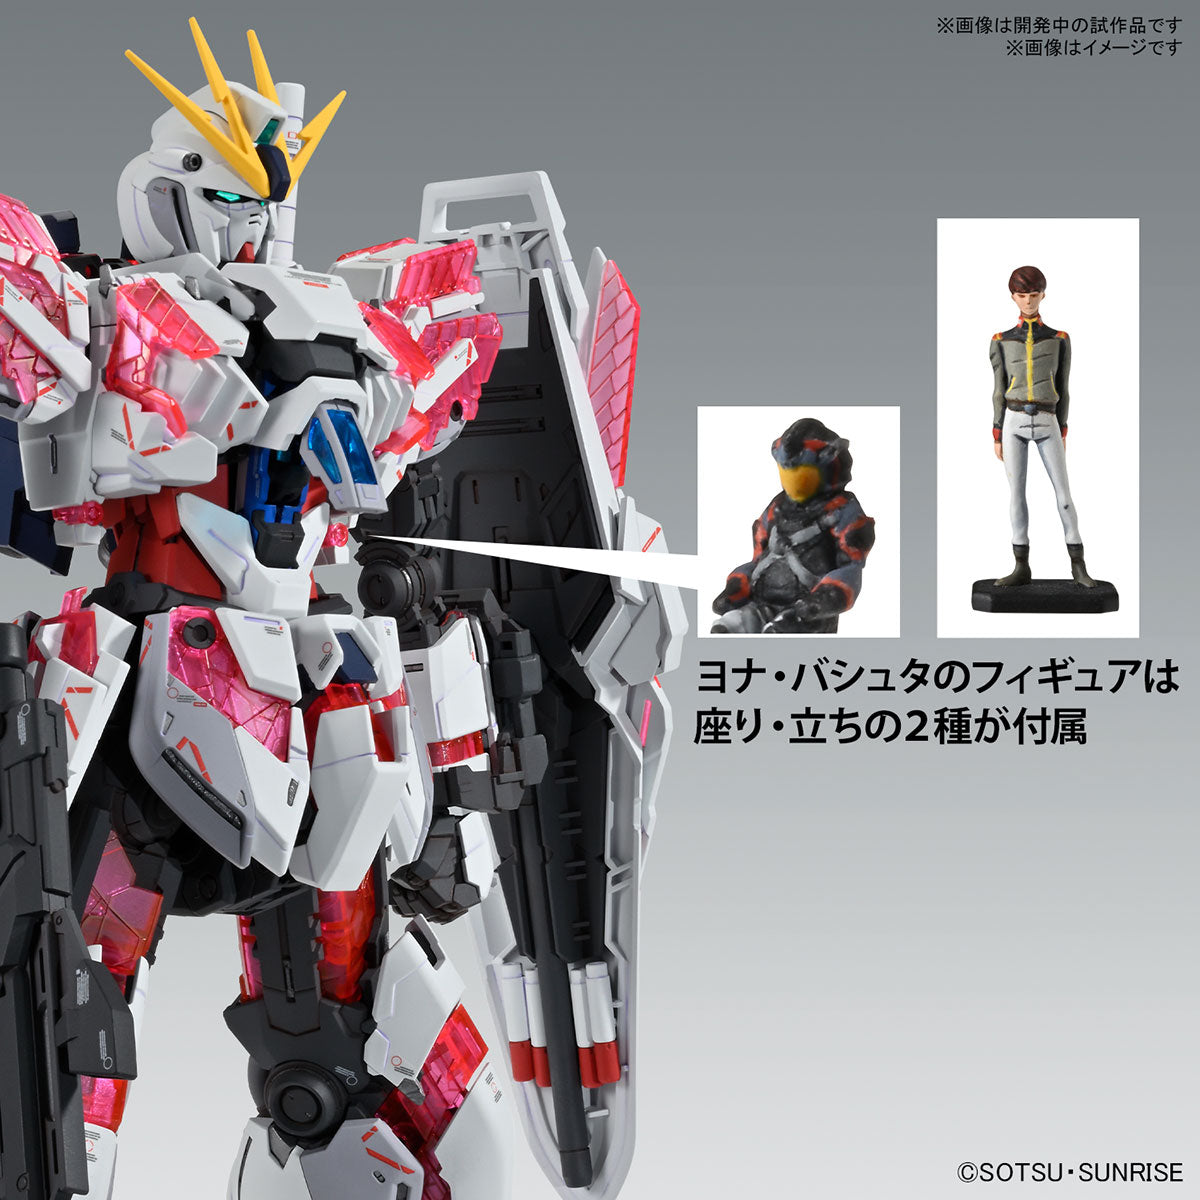 Bandai Gunpla Master Grade MG Narrative Gundam C-Packs Ver Ka 塑料模型动作玩具 VCA China